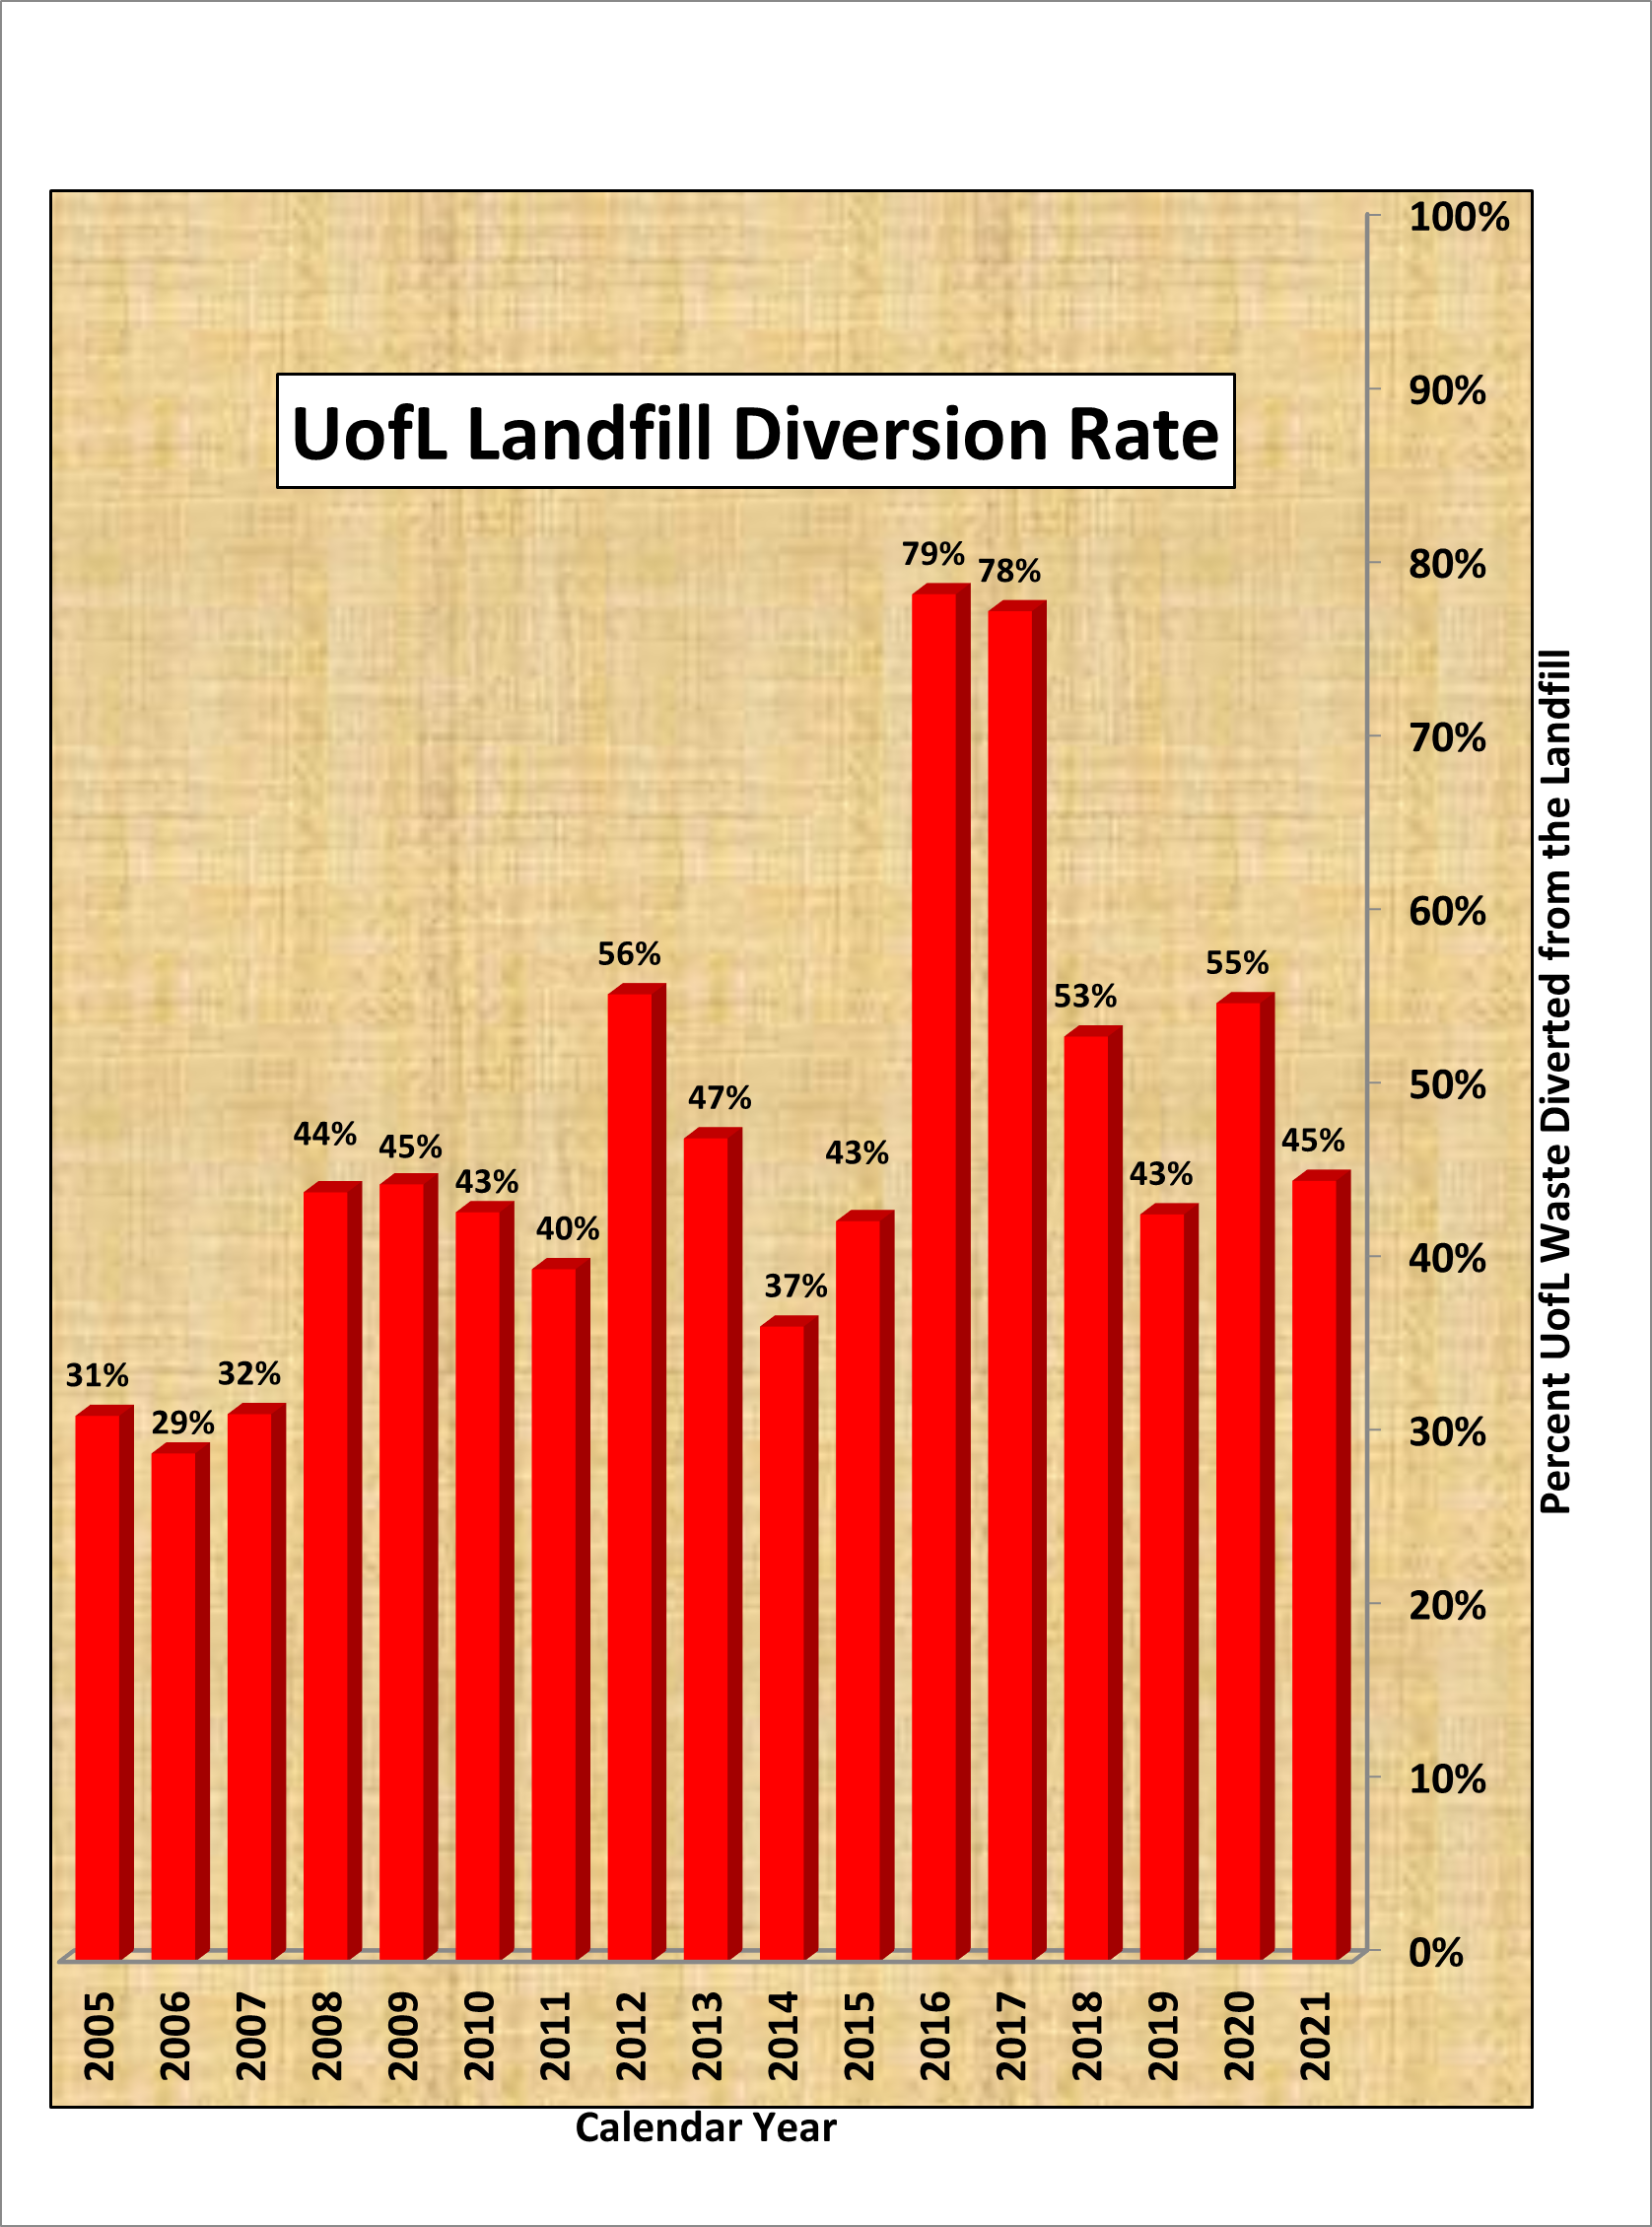 UofL Landfill Diversion Rate